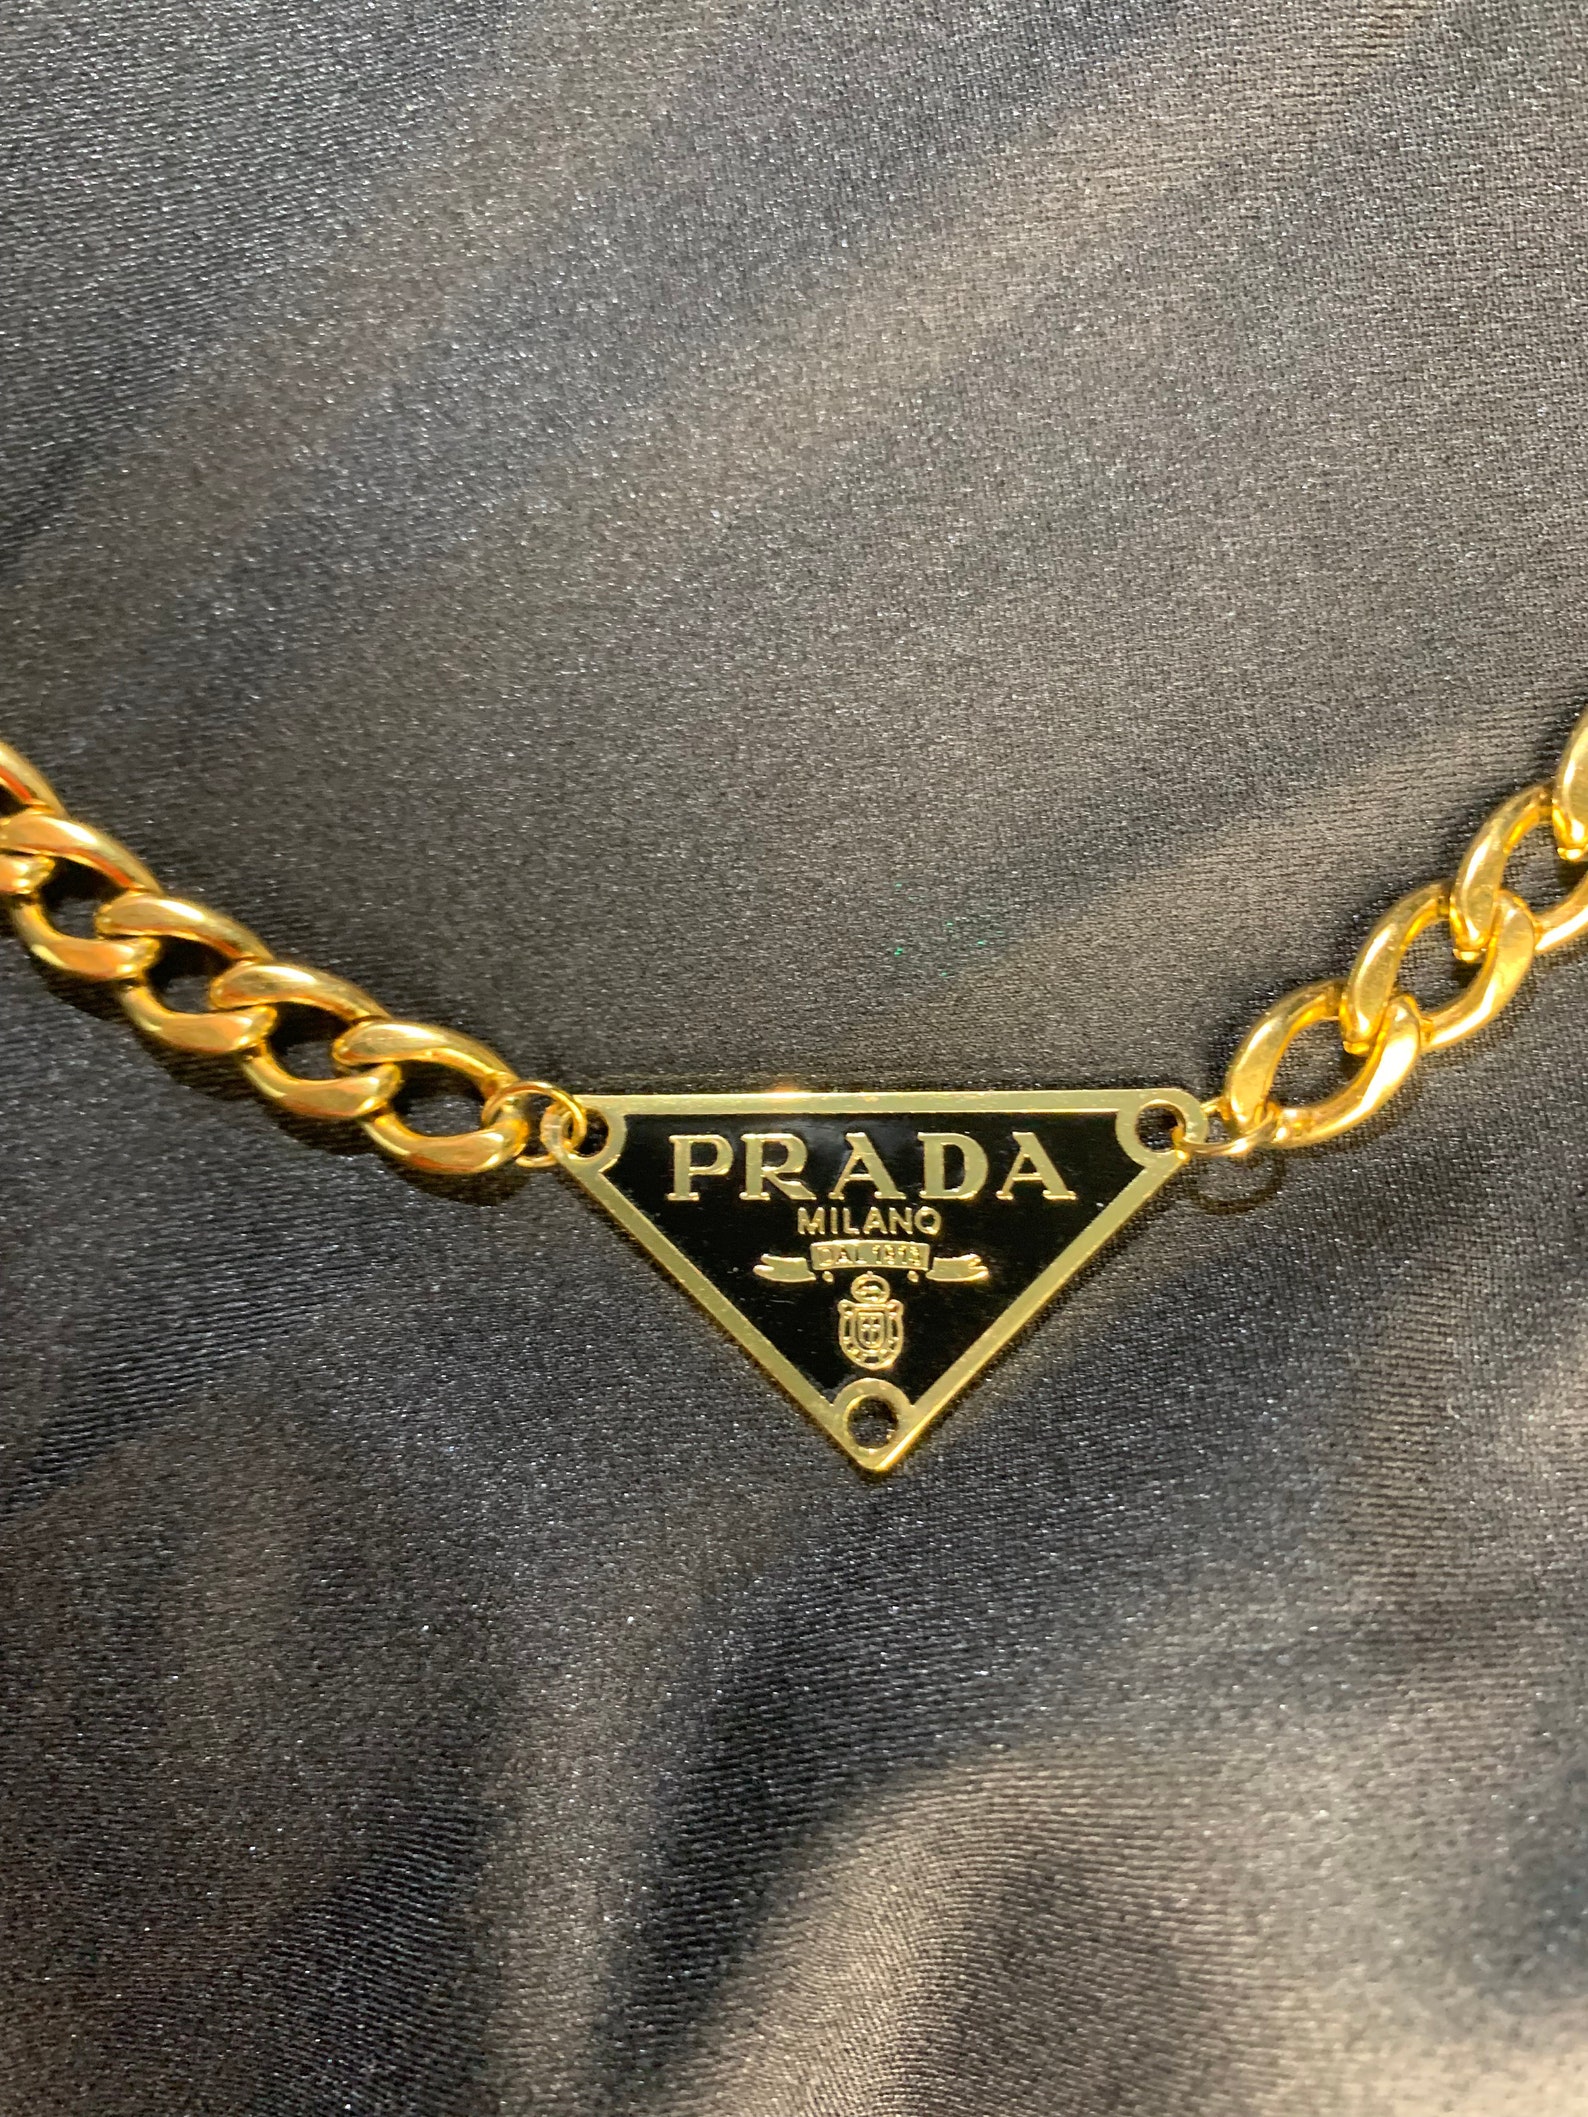 PRADA Chunky Chain Link Necklace 18K GOLD - Etsy